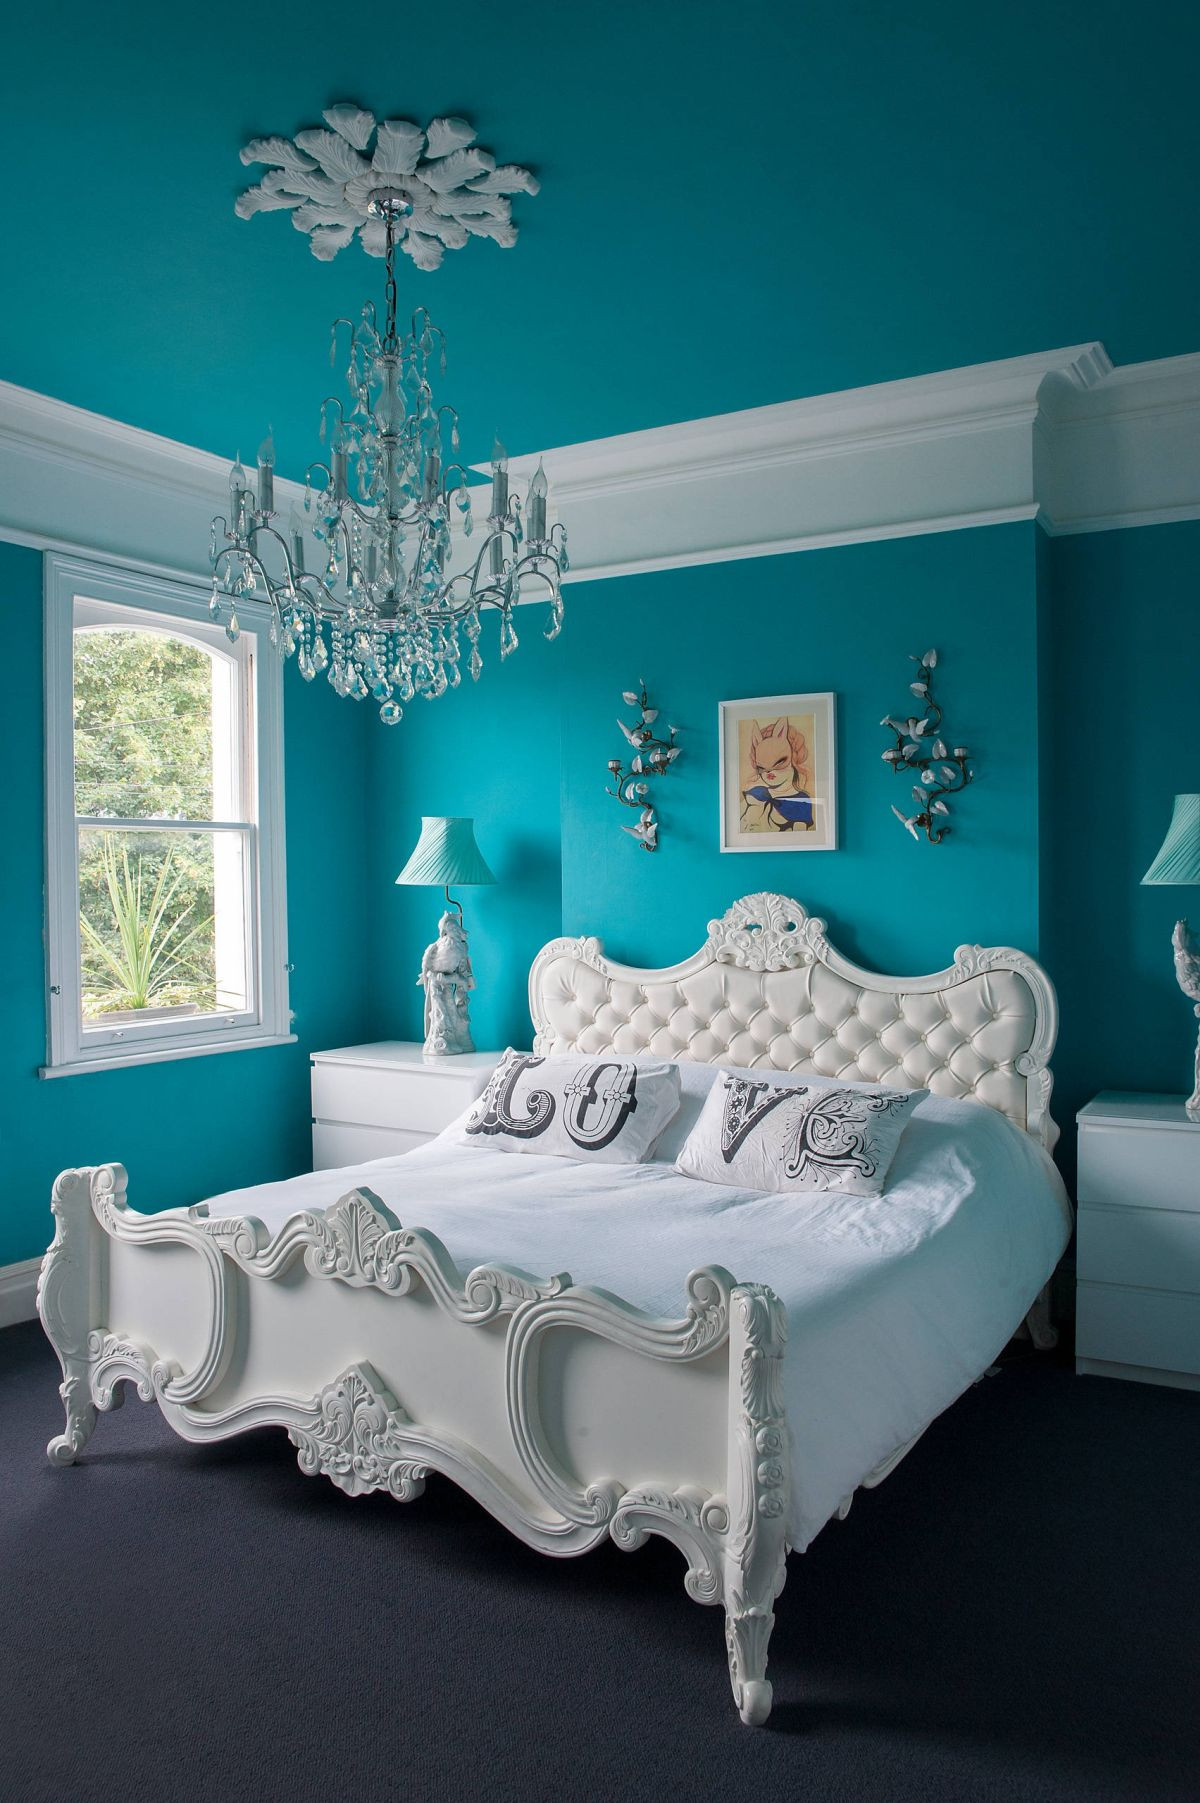 Best Paint Colors For Bedroom
 The Four Best Paint Colors For Bedrooms